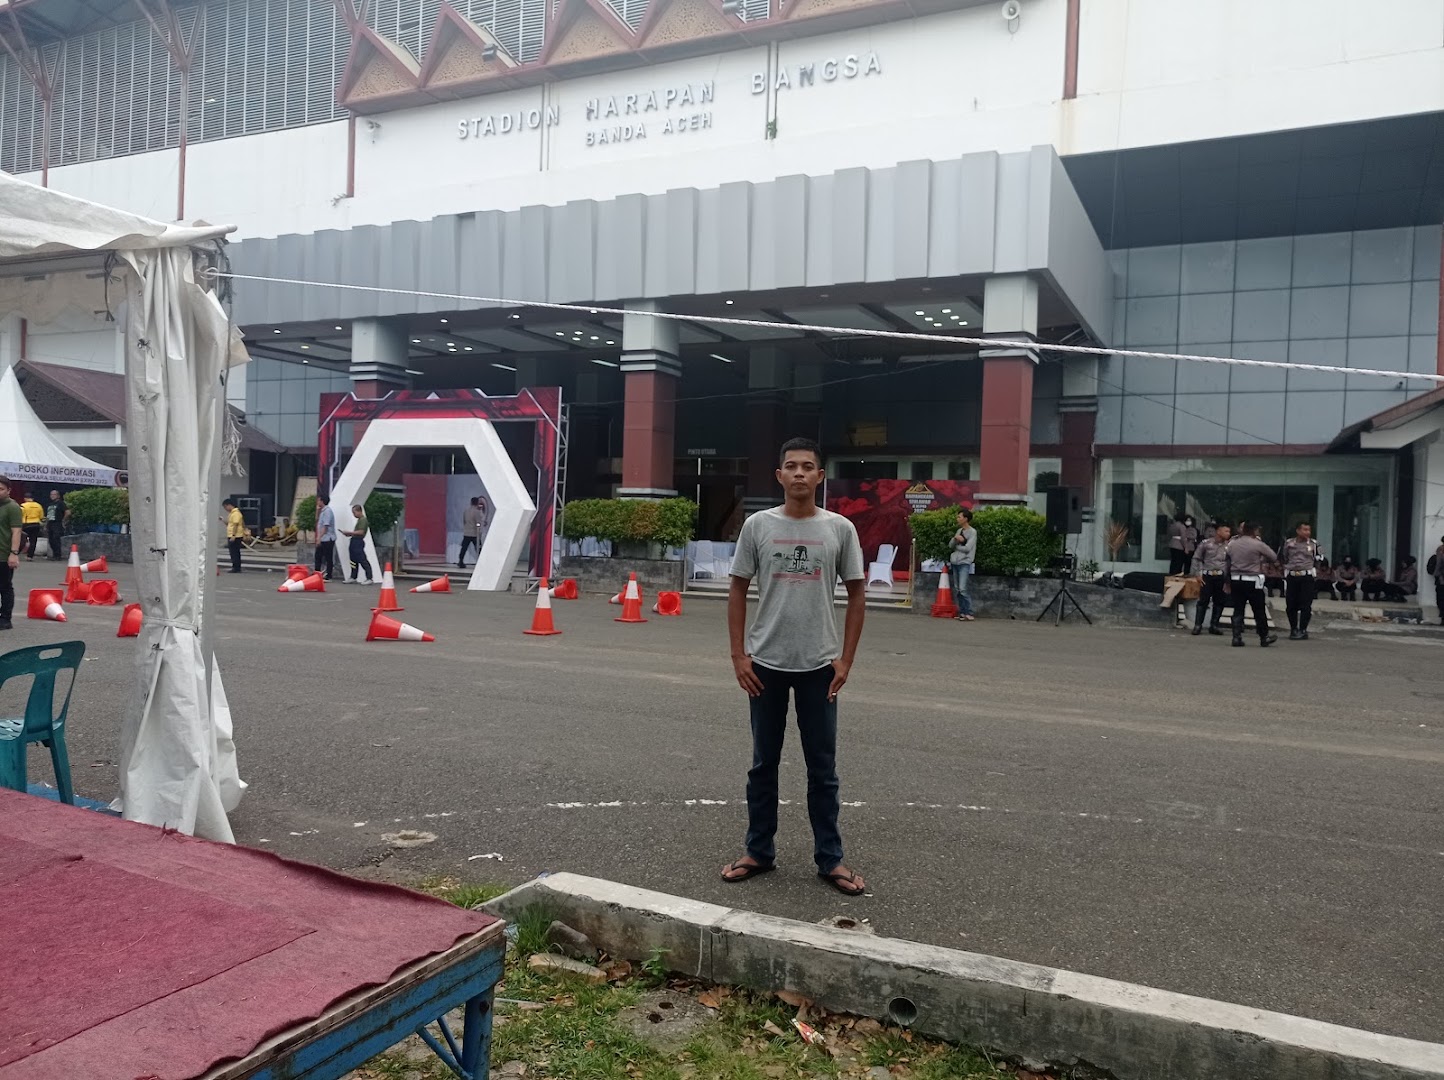 Kantin Stadion Harapan Bangsa Aceh Photo